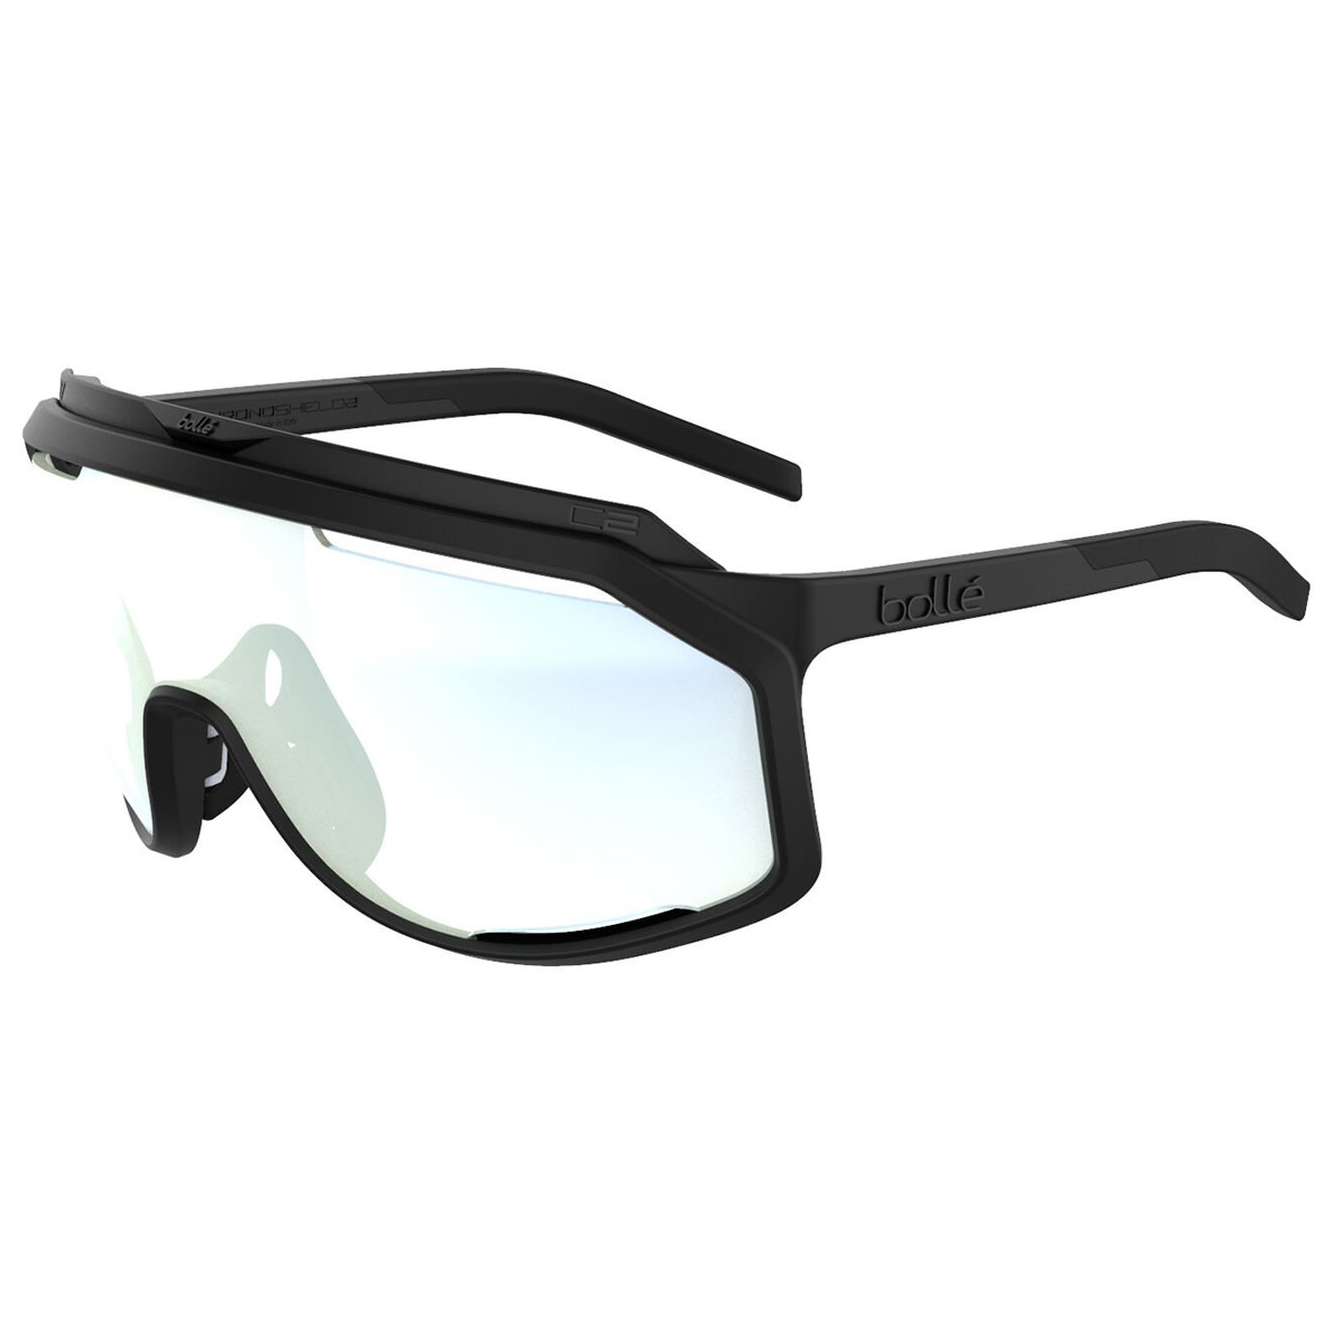 Велосипедные очки Bollé Chronoshield Photochromic S1 3 (VLT 62 9%), цвет Black Matte